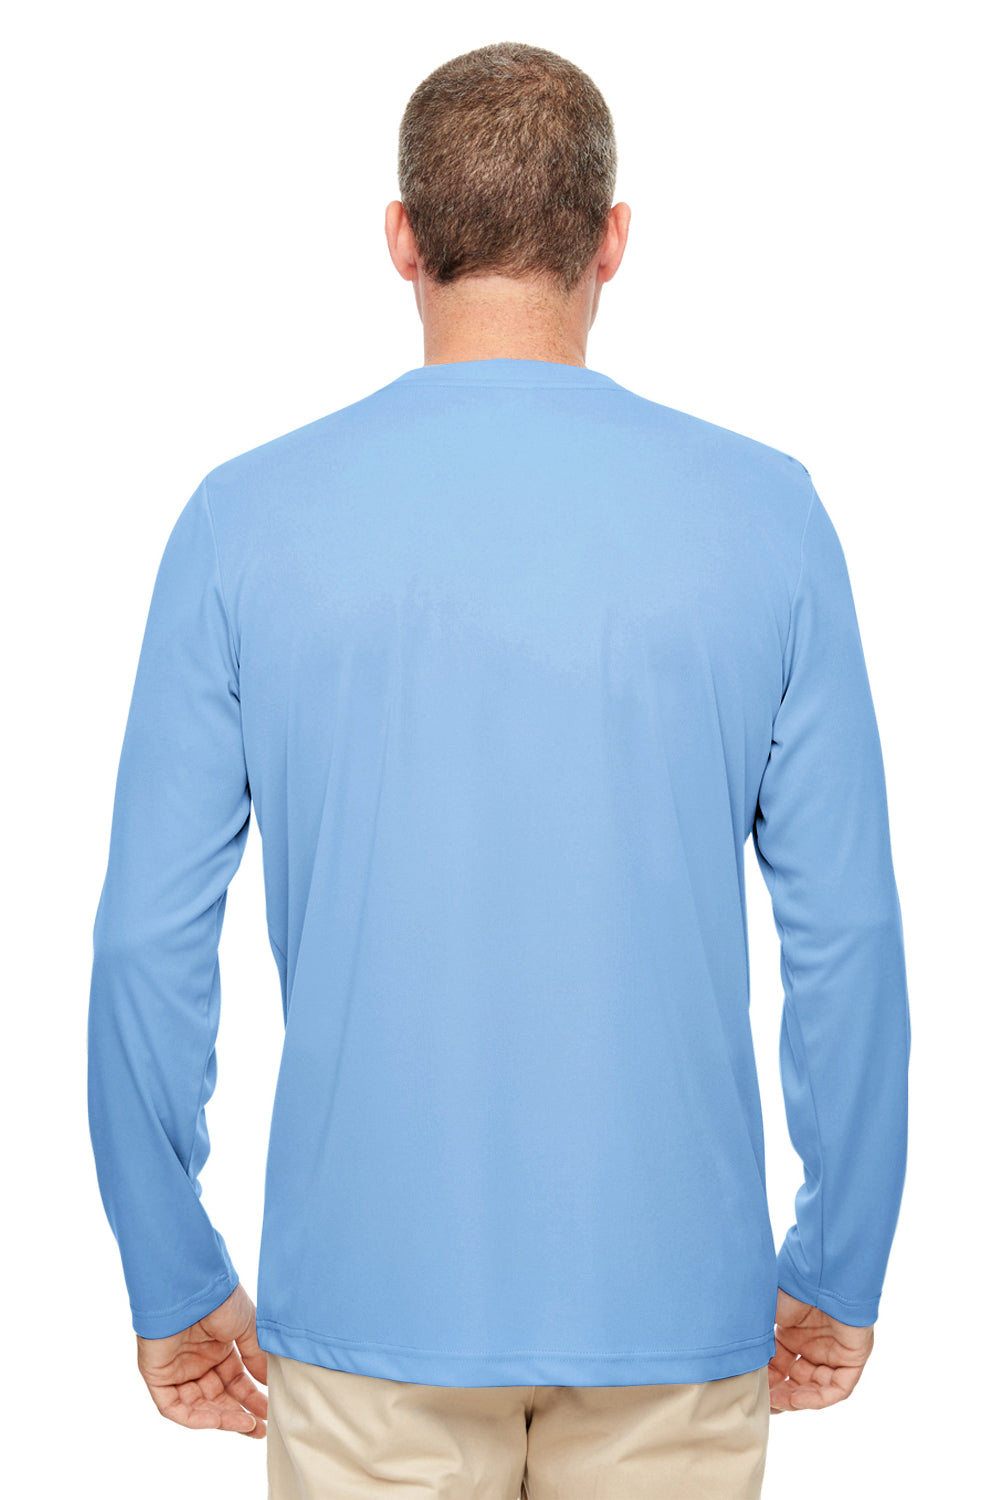 UltraClub 8622 Mens Cool & Dry Performance Moisture Wicking Long Sleeve Crewneck T-Shirt Columbia Blue Back